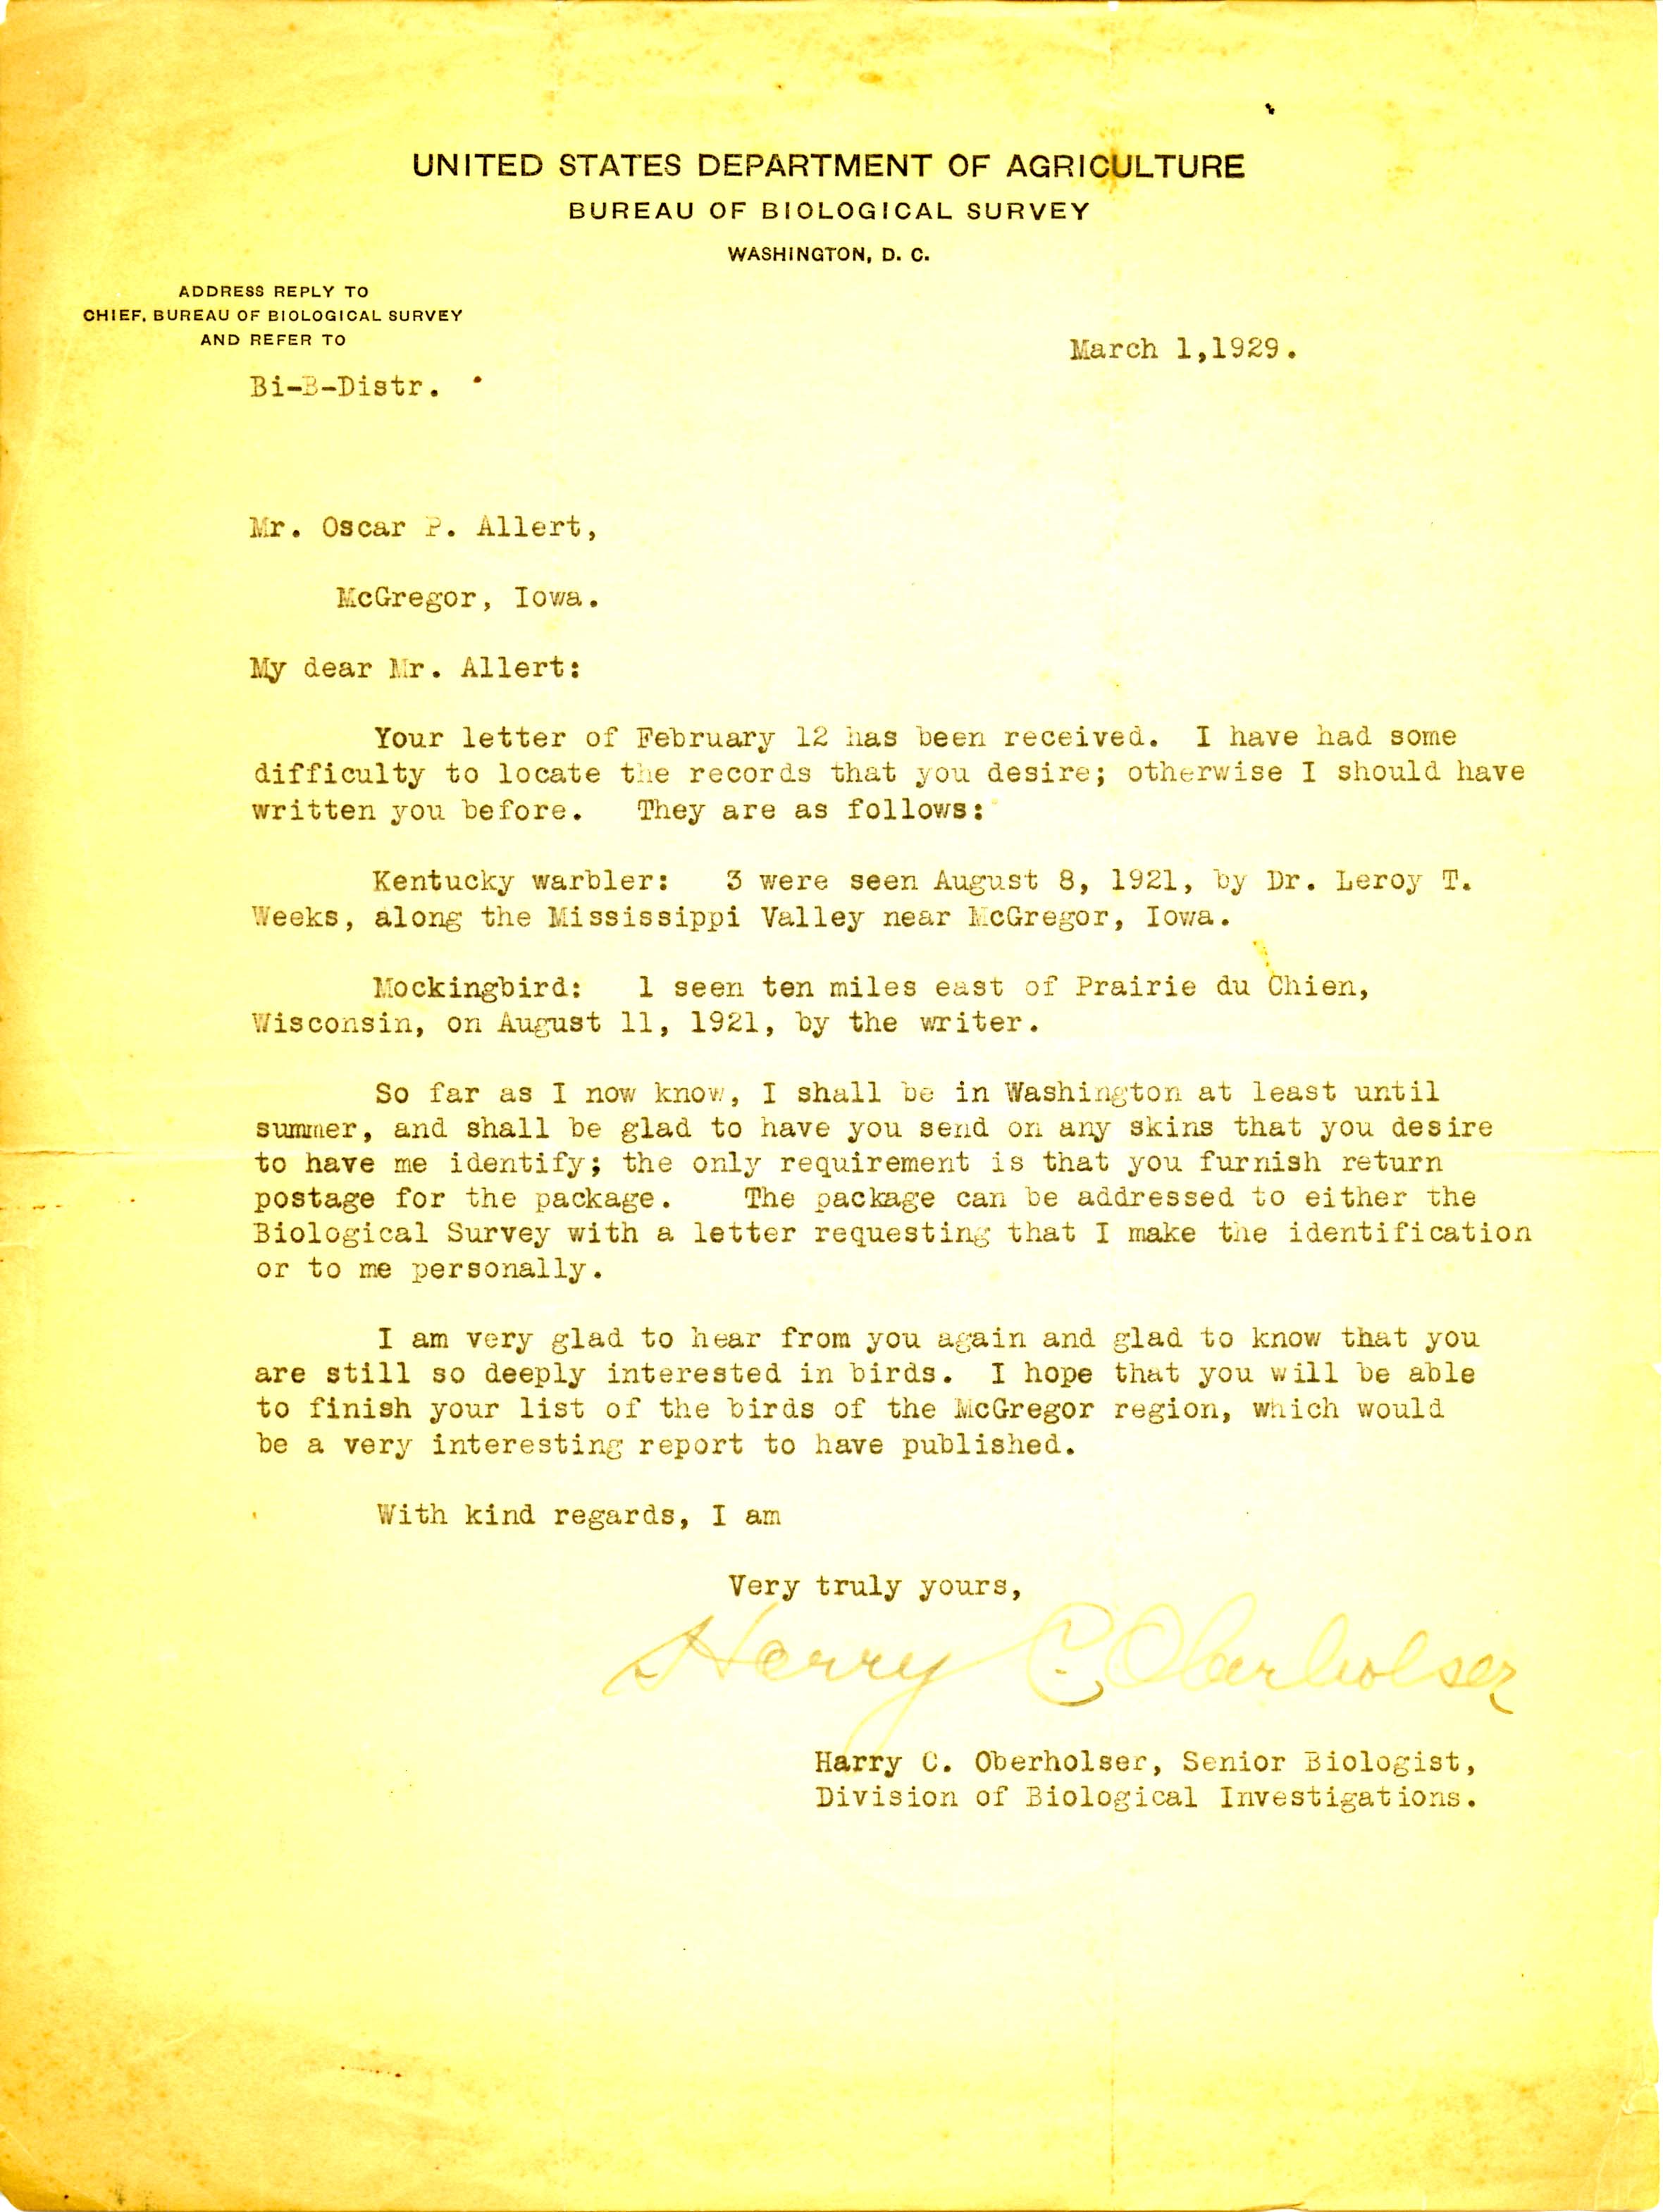 Harry Oberholser letter to Oscar Allert regarding bird sightings, March 1, 1929